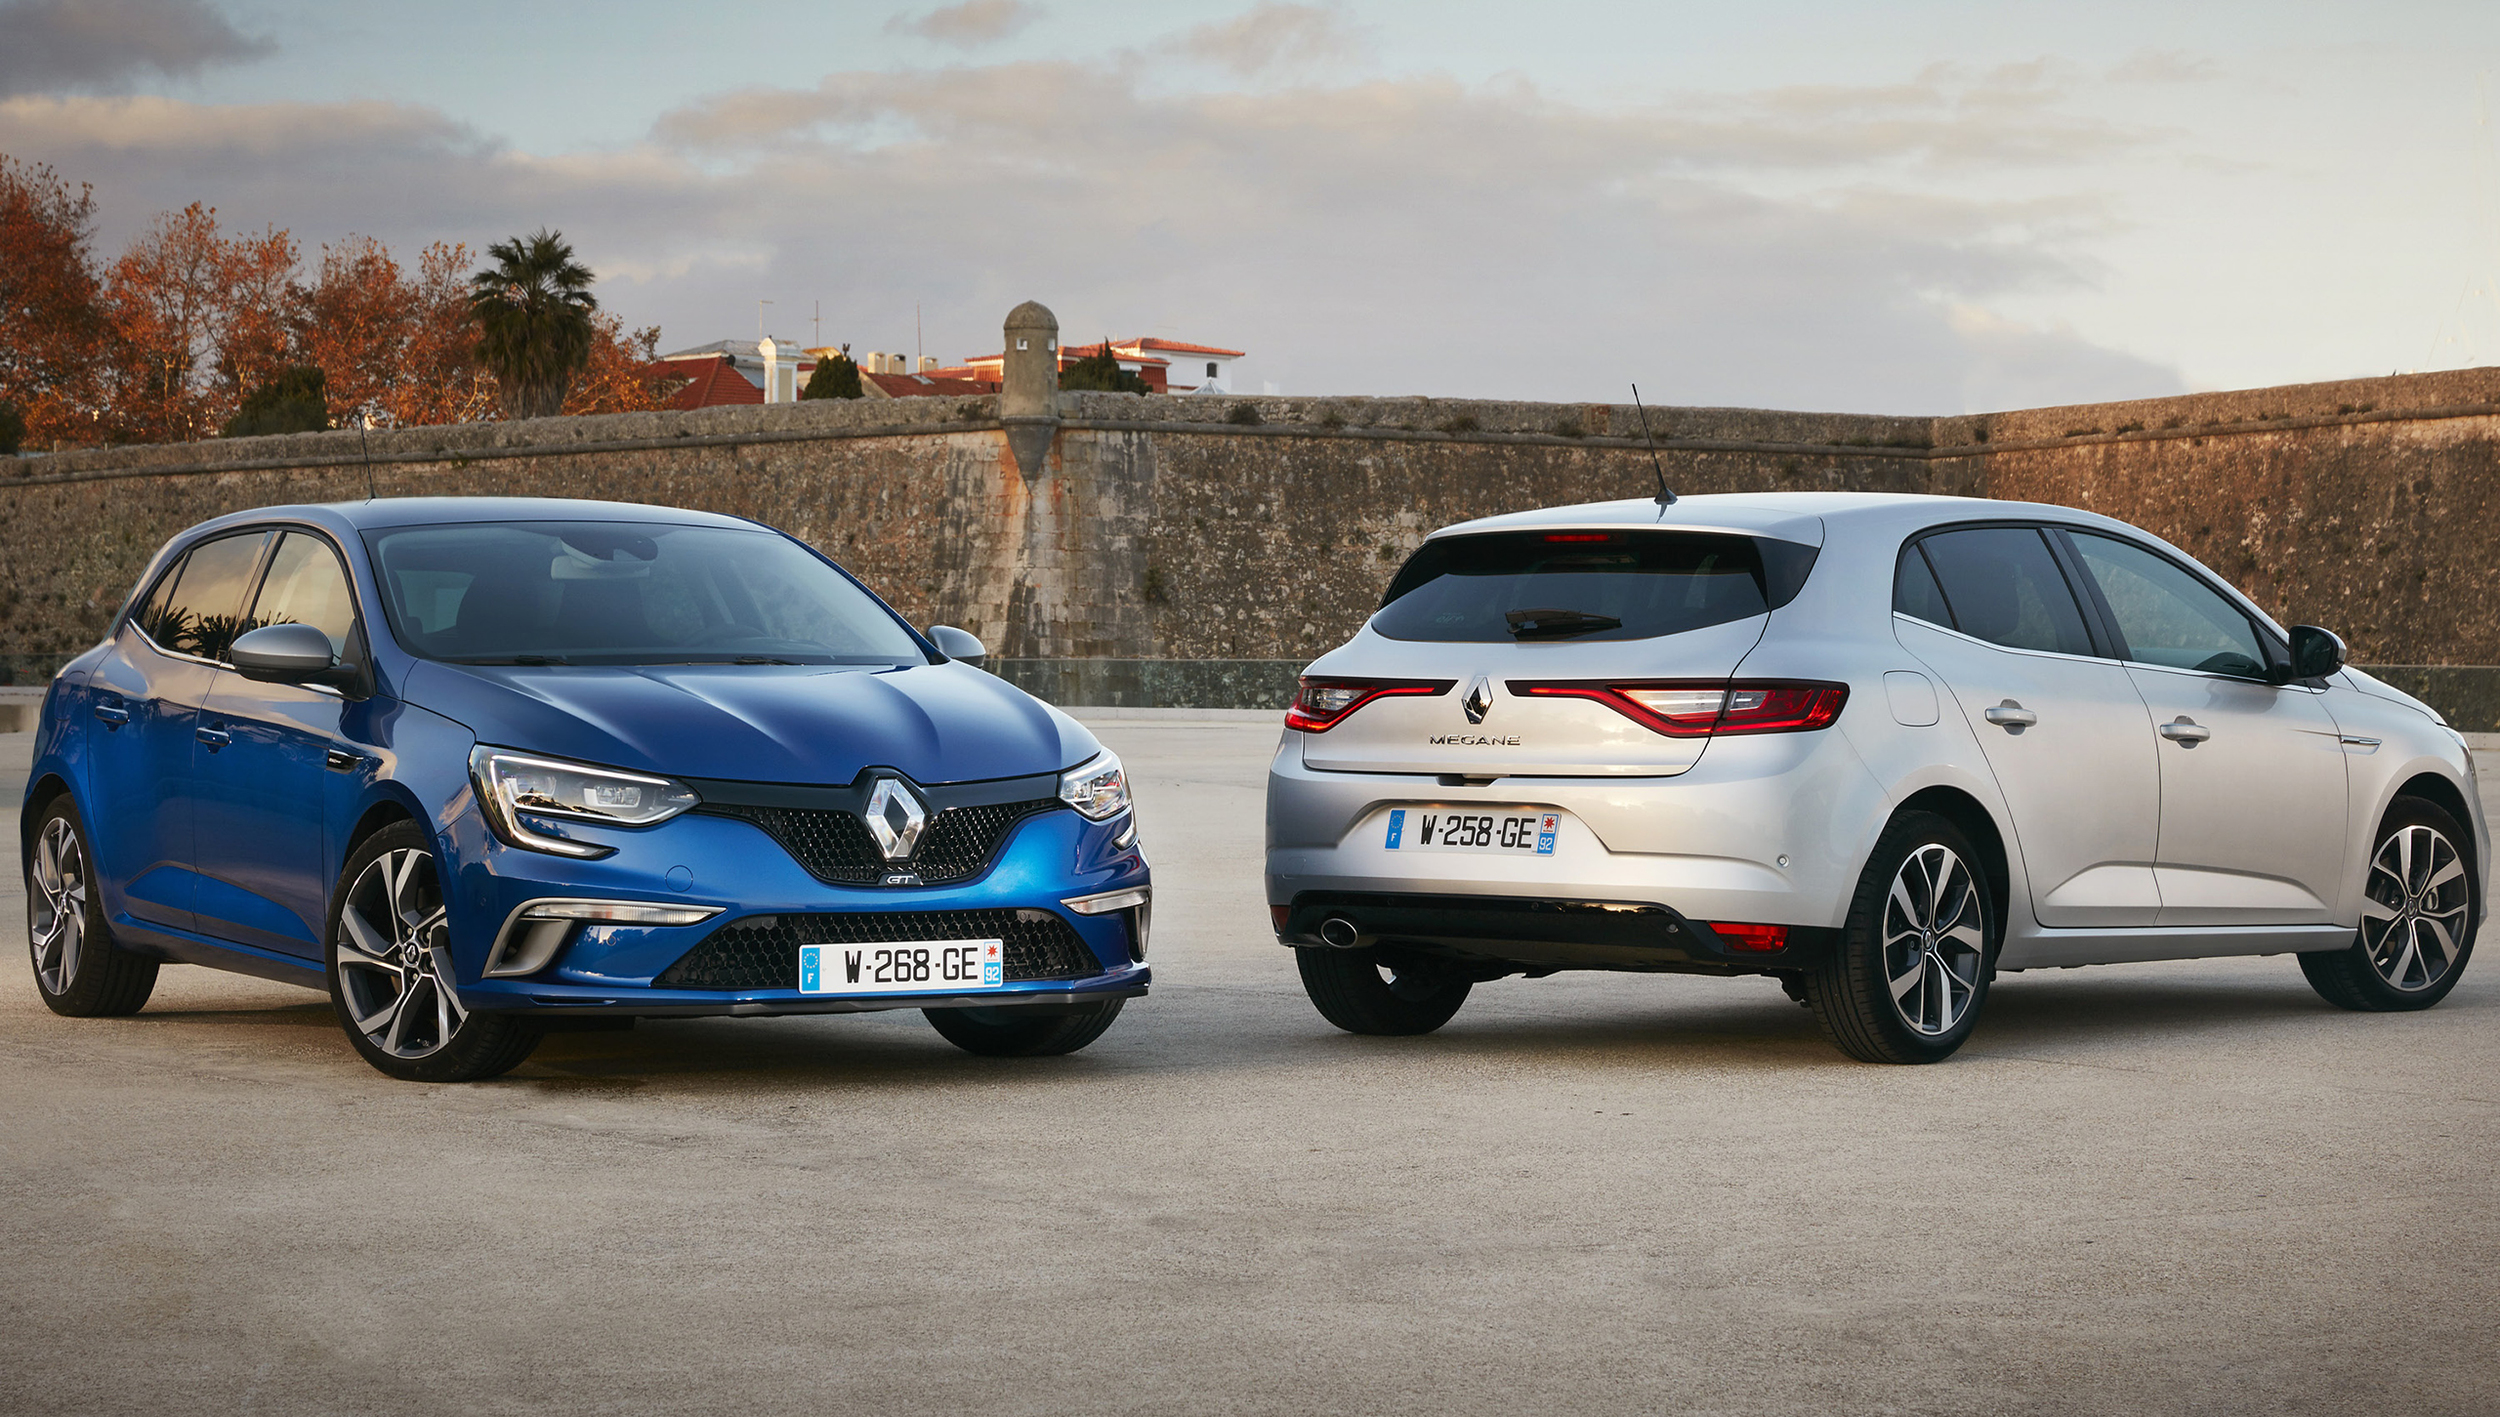 Renault reveals more new Megane details